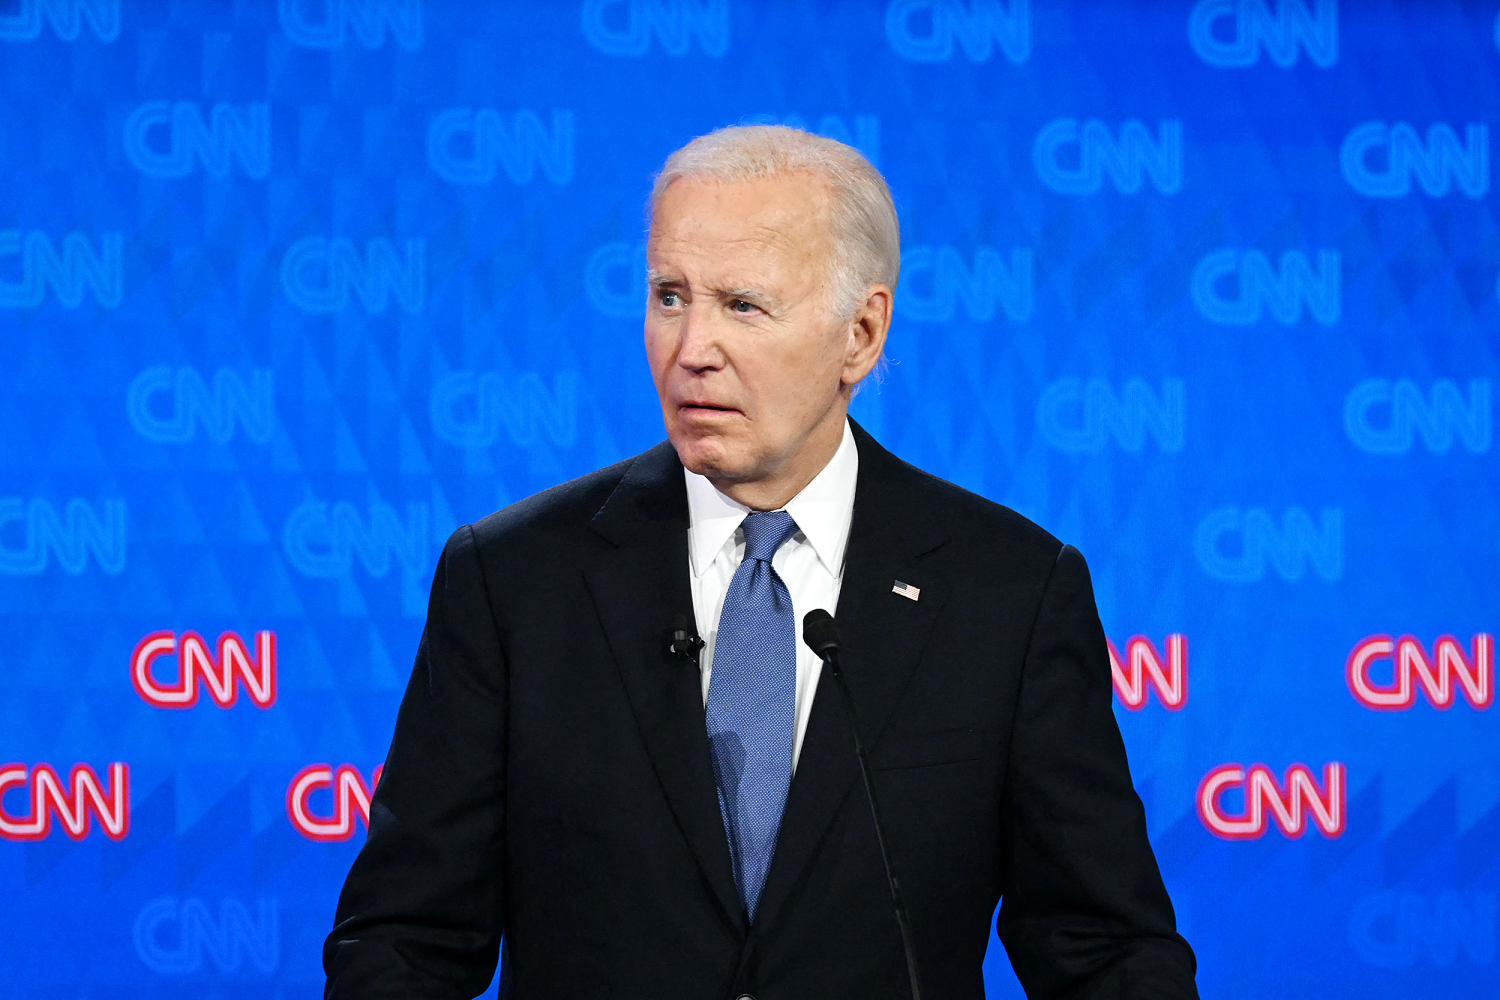 'Historically bad': Biden's debate performance alarms U.S. allies